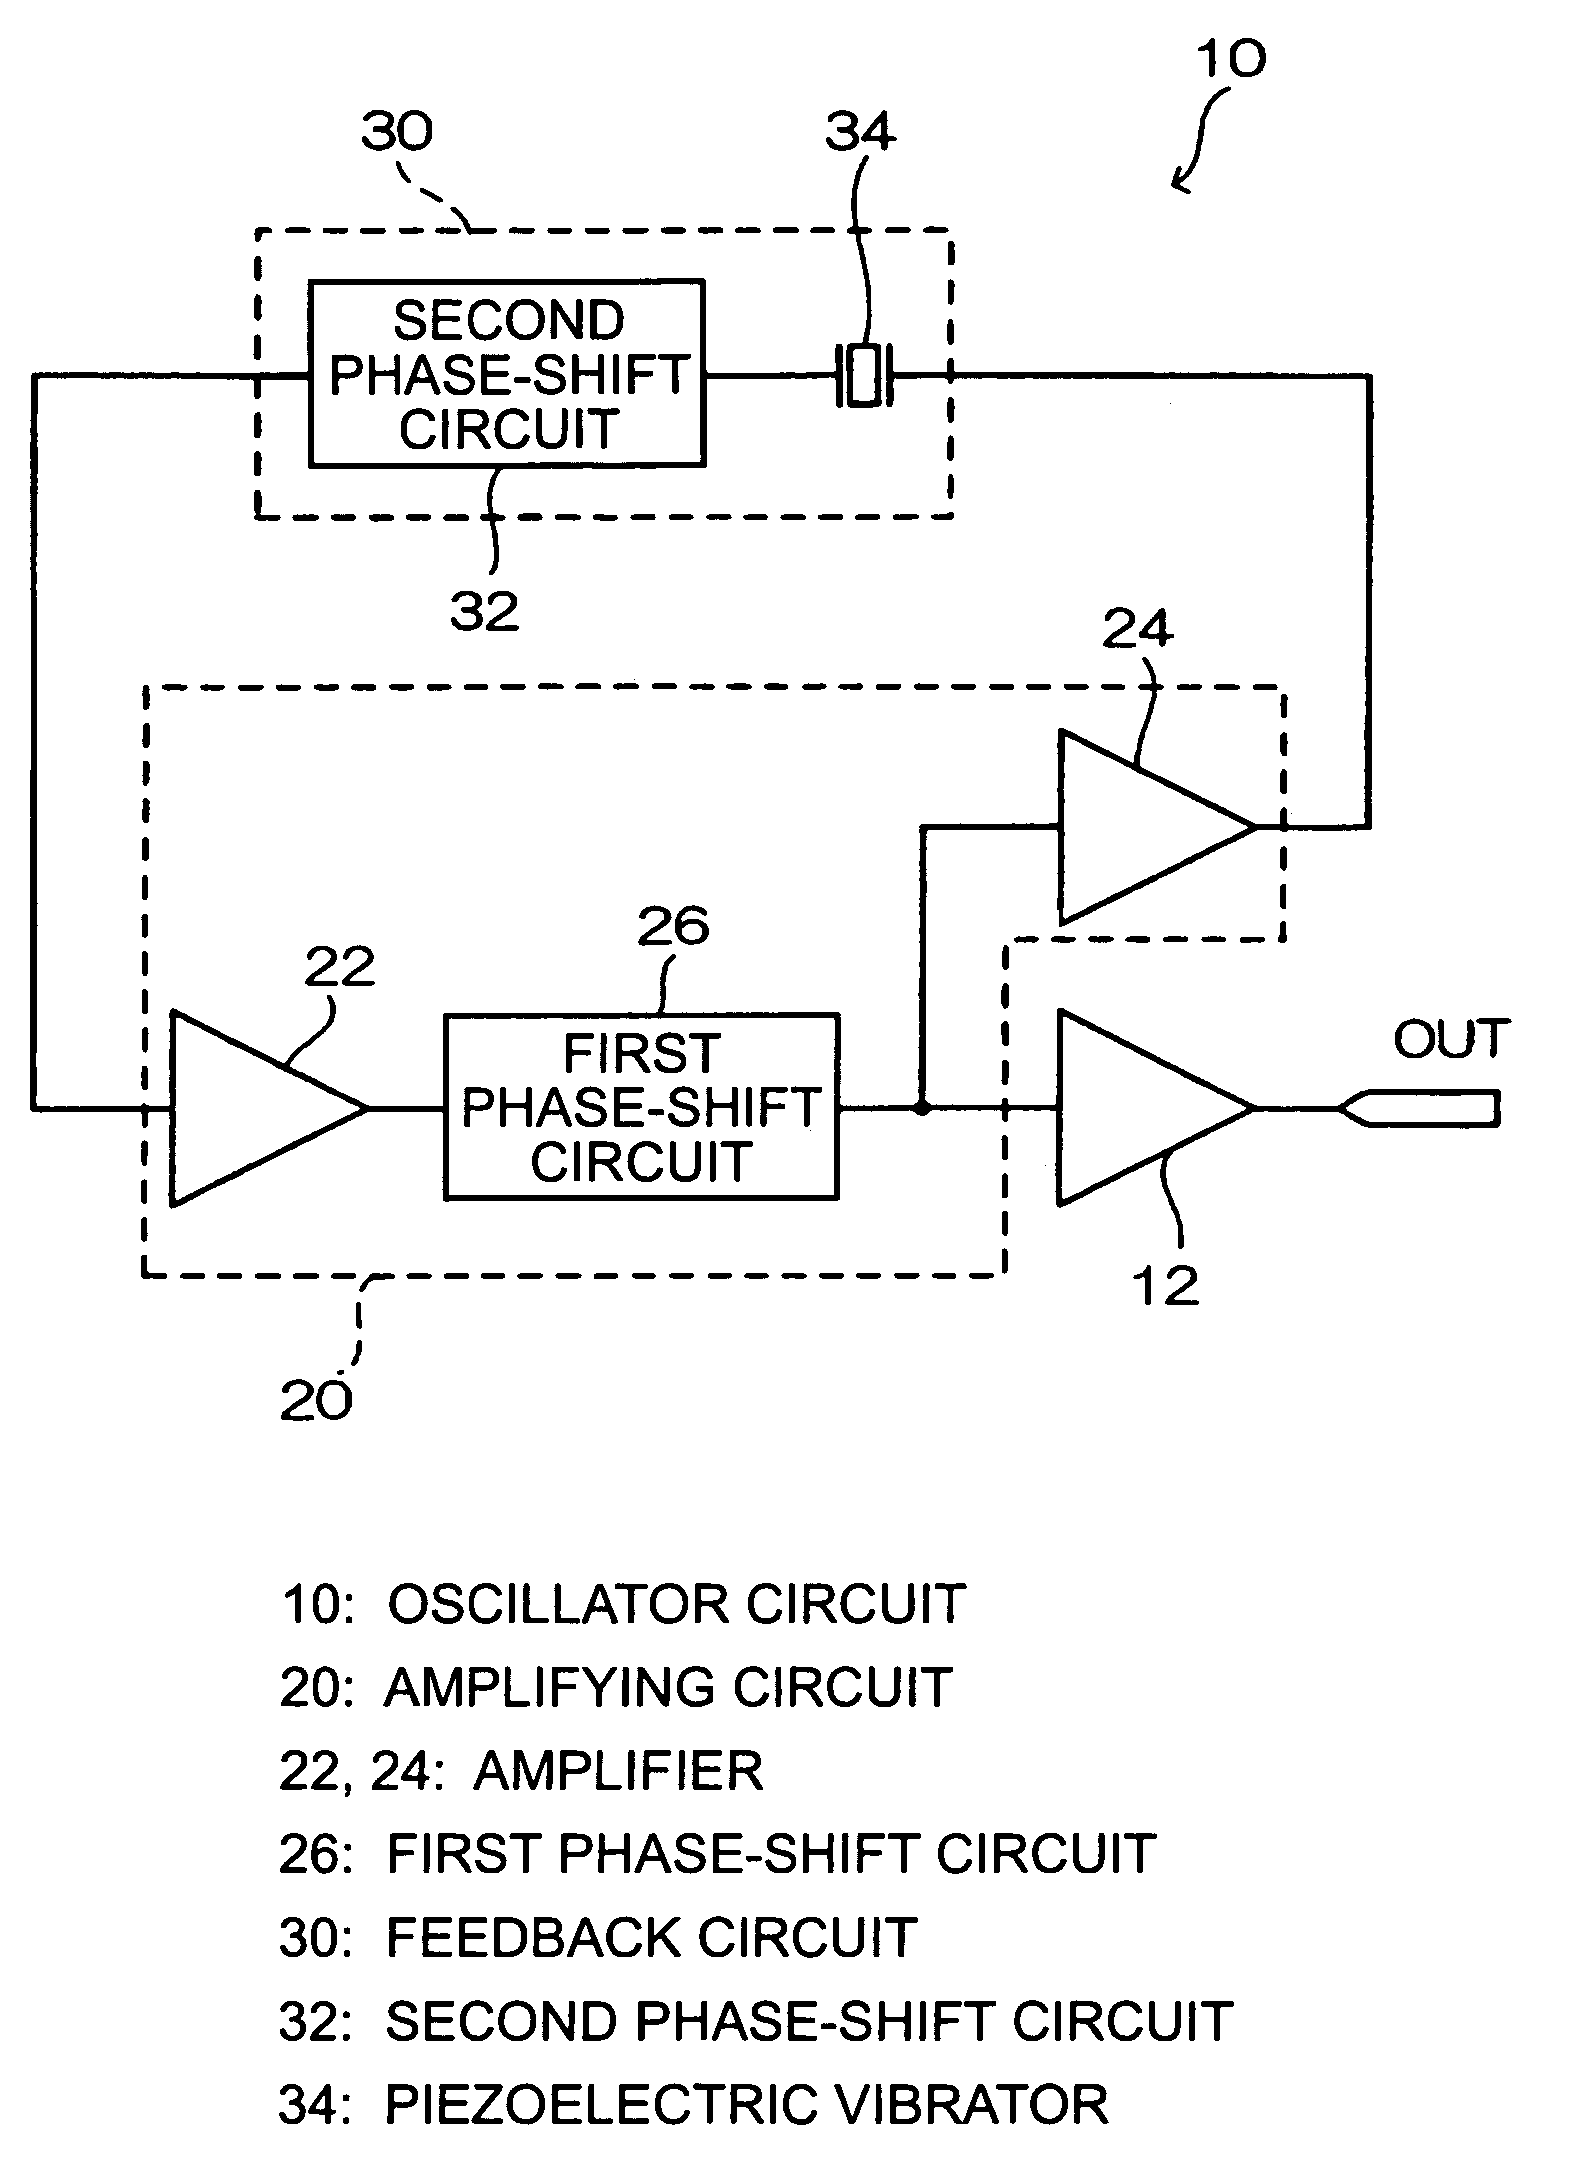 Oscillator circuit, oscillator circuit adjusting method, and mass measuring apparatus using oscillator circuit